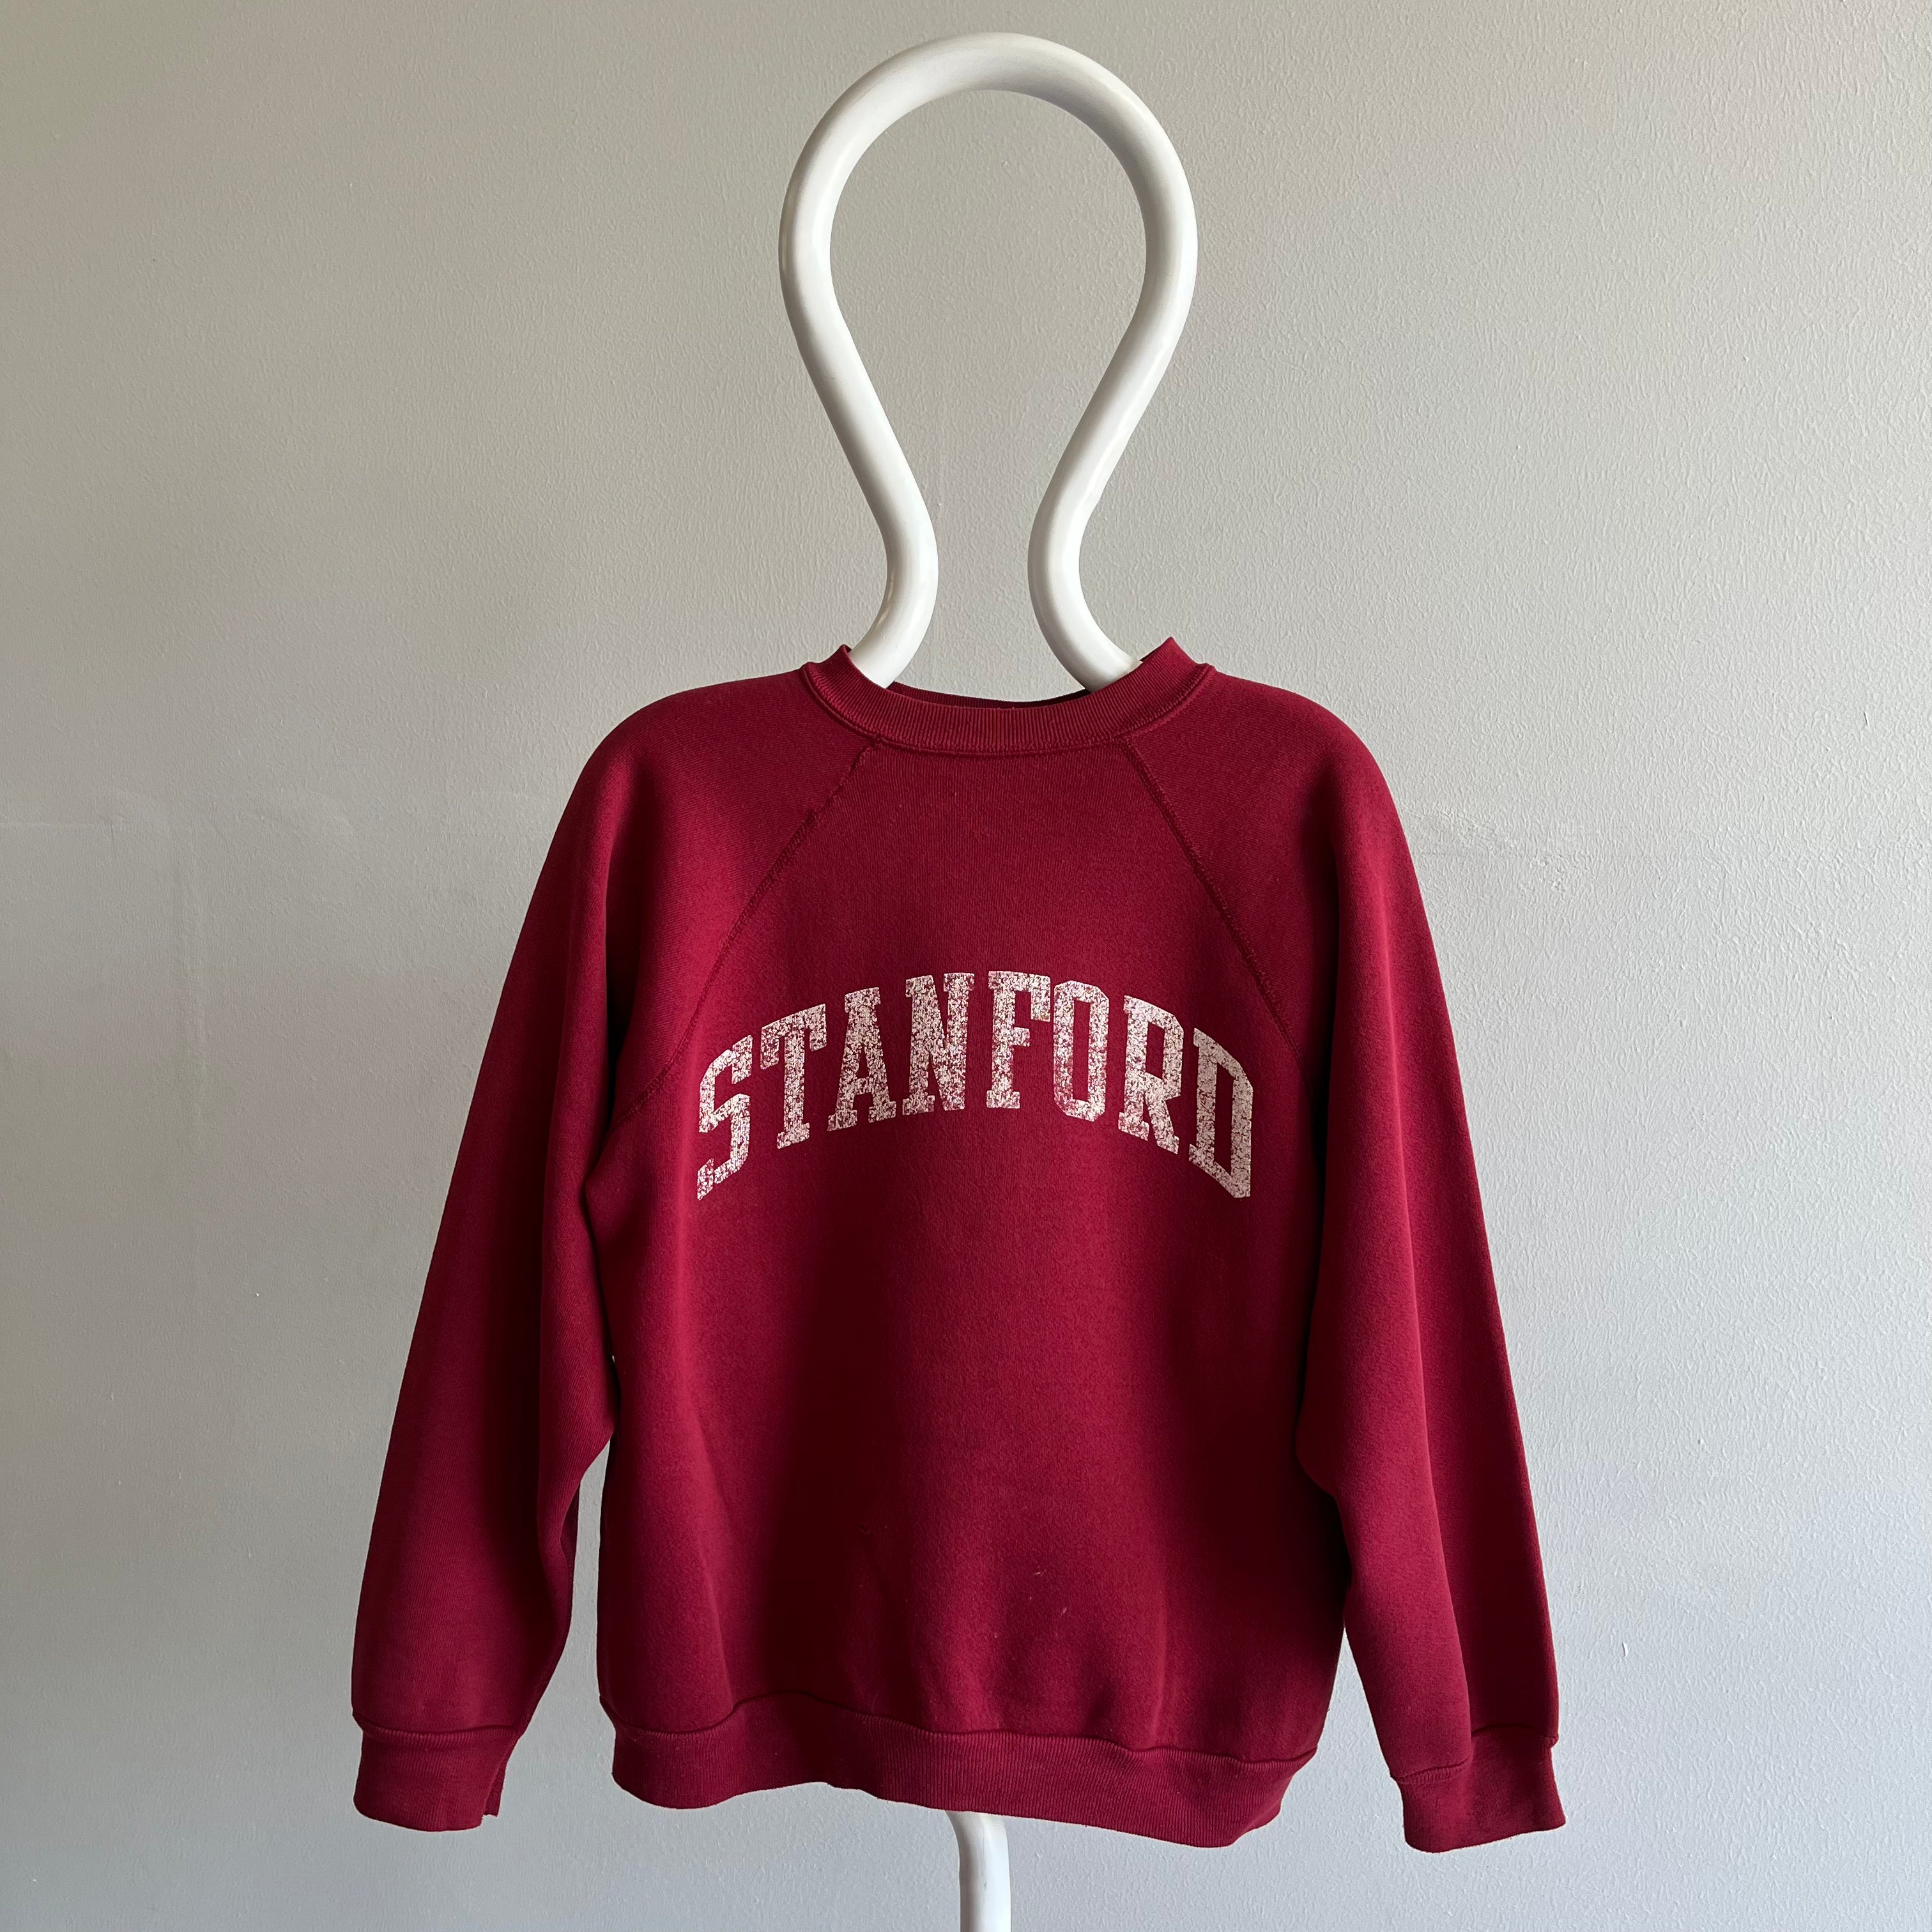 1970/80s Stanford University Sweatshirt with Mending